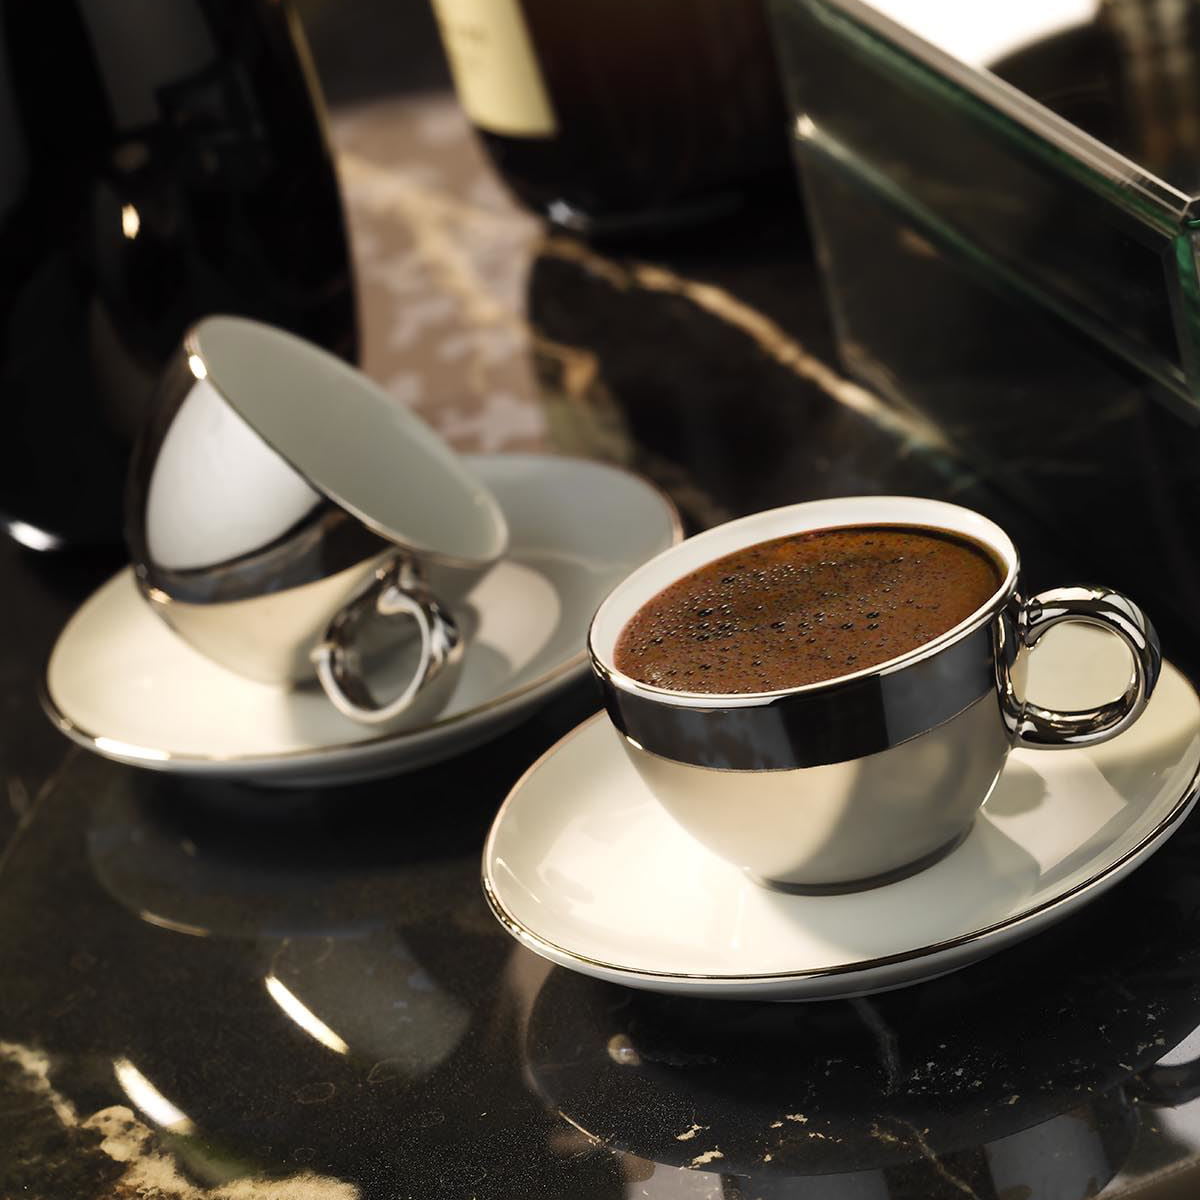 Deluxe Turkish Coffee for Four  Turkish coffee, Turkish coffee